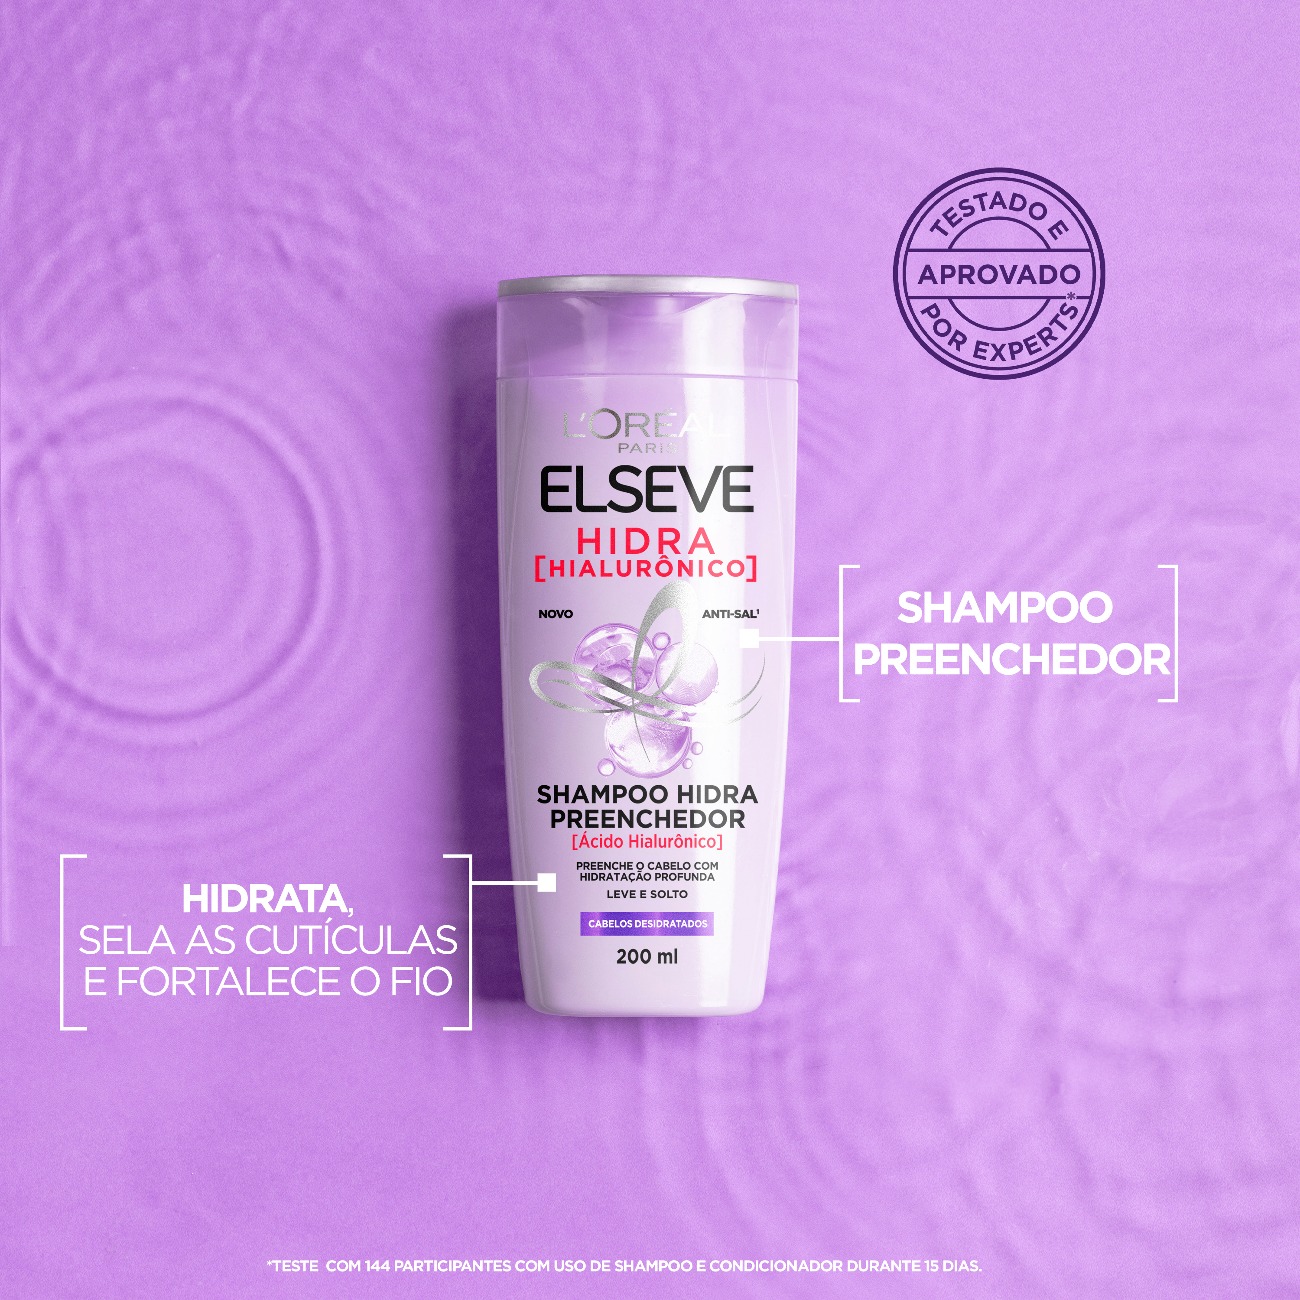 Shampoo Preenchedor Elseve Hidra Hialurnico 200mL